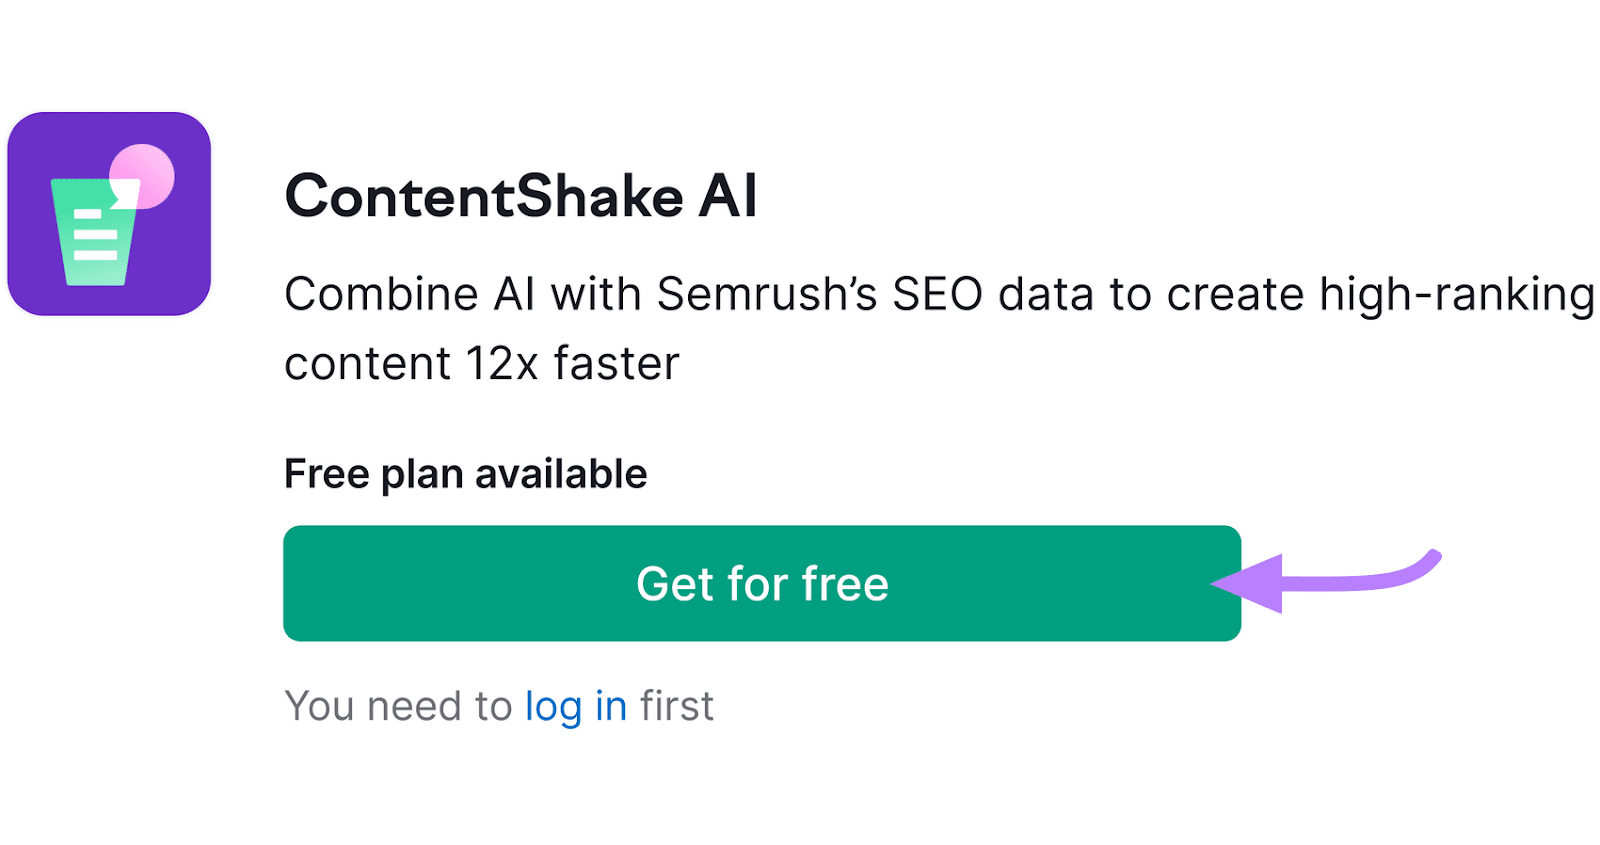 ContentShake AI's landing page